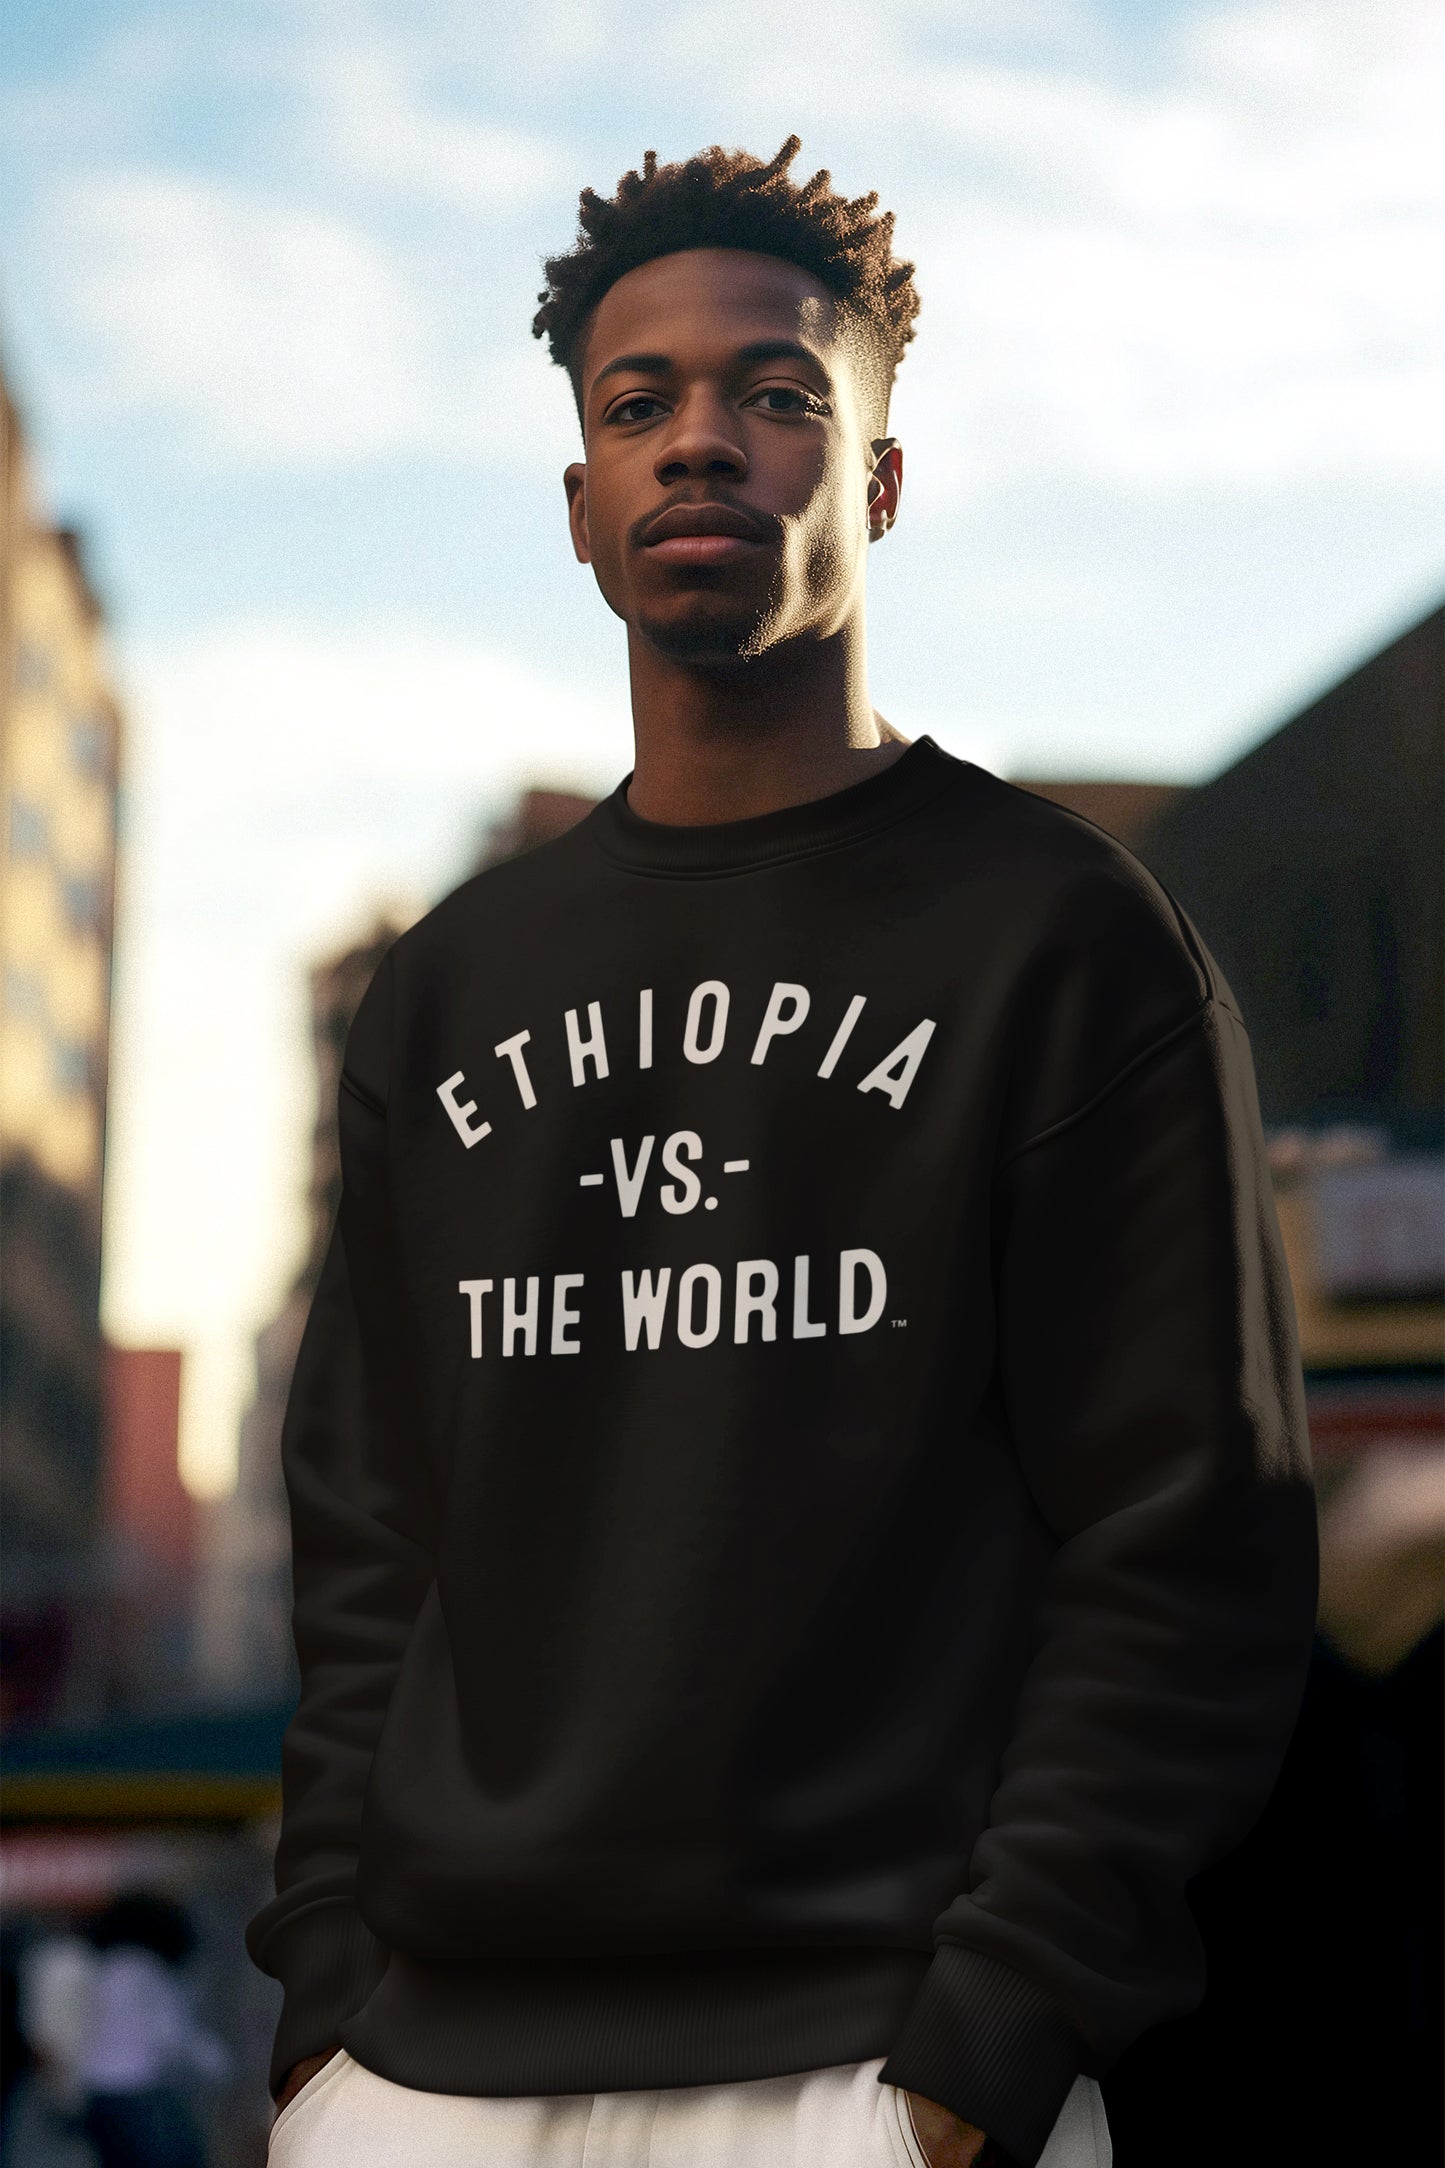 ETHIOPIA Vs The World Unisex Sweatshirt